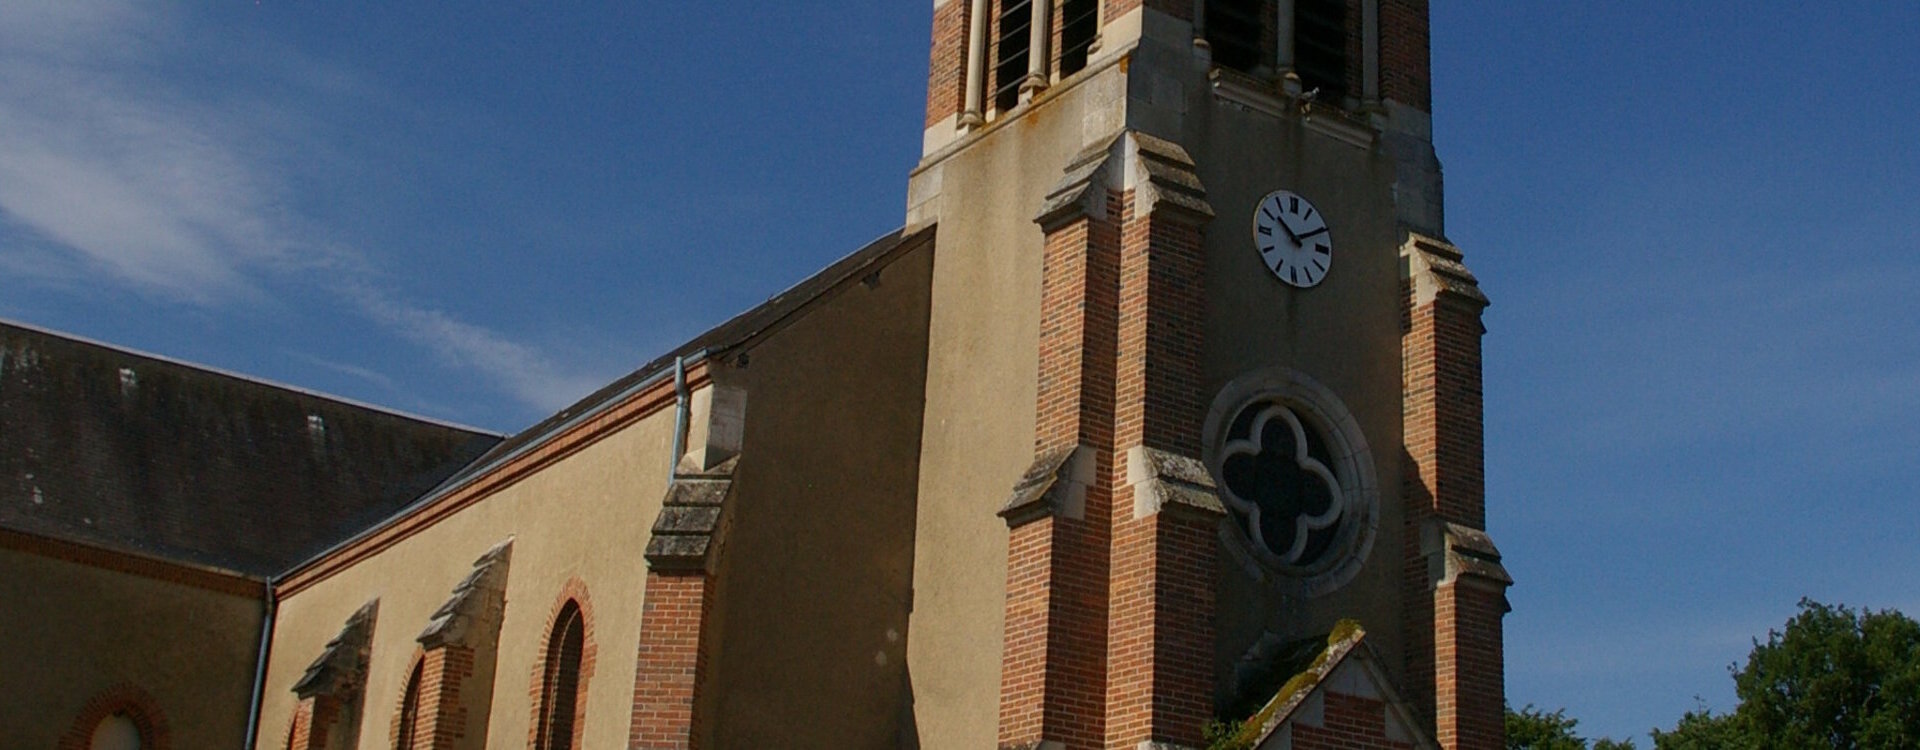 Mairie Commune Municipalité Presly Cher Bourges